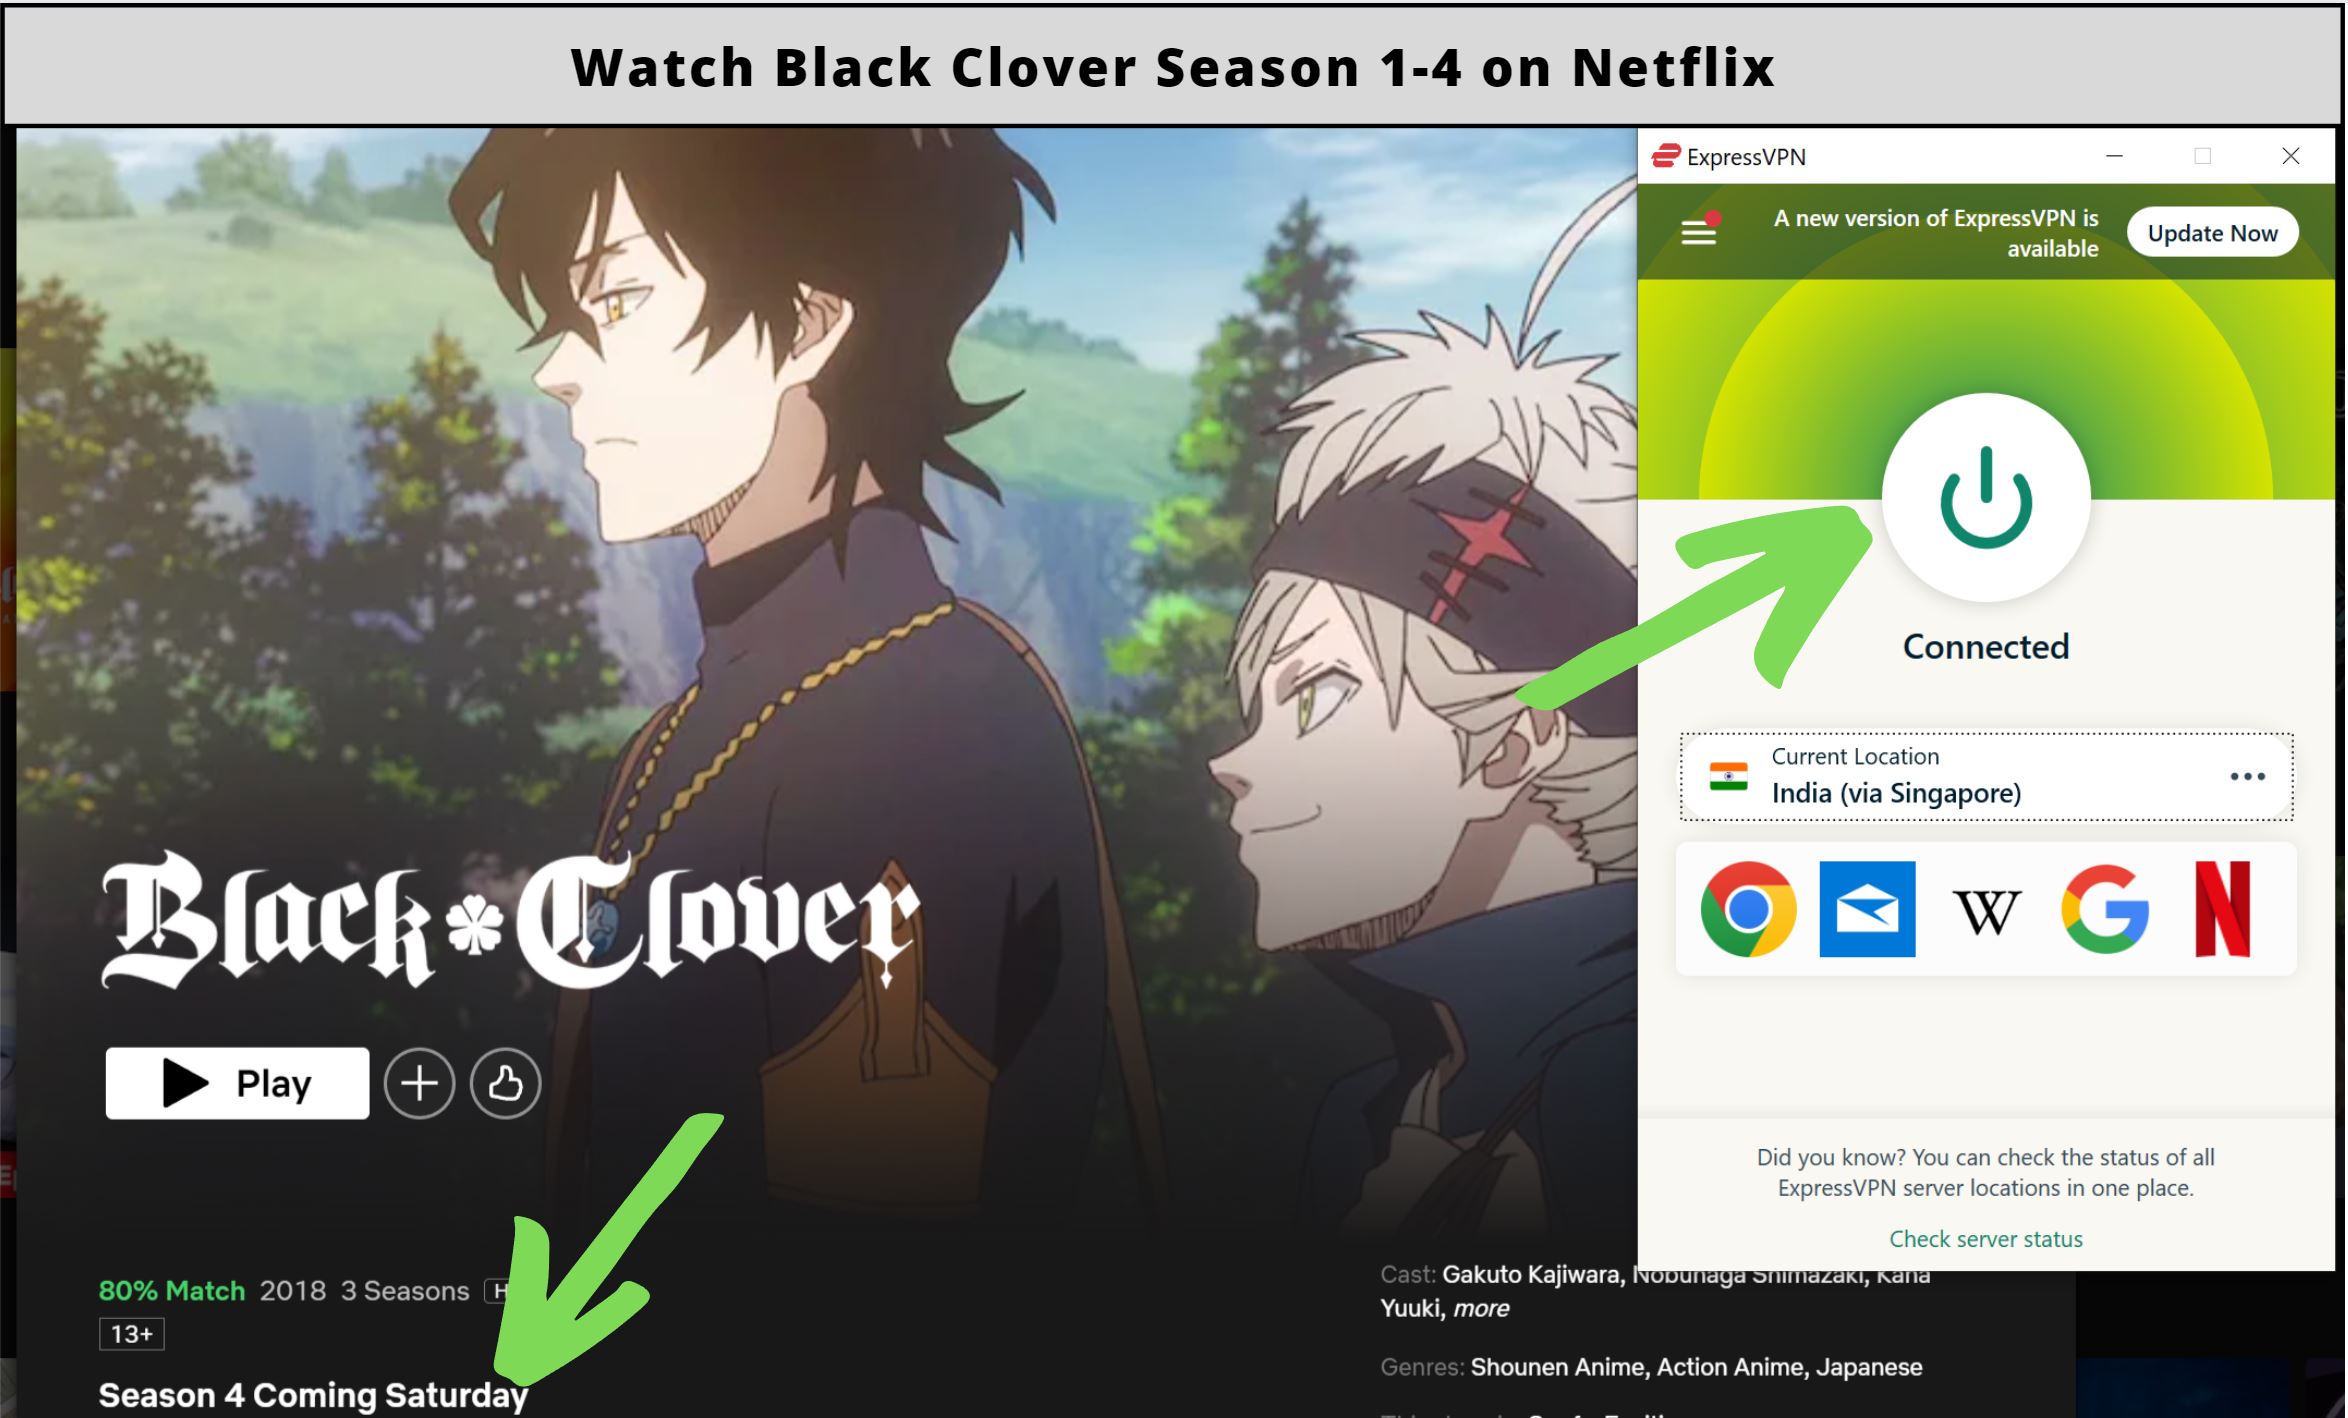 Is Black Clover on Netflix?